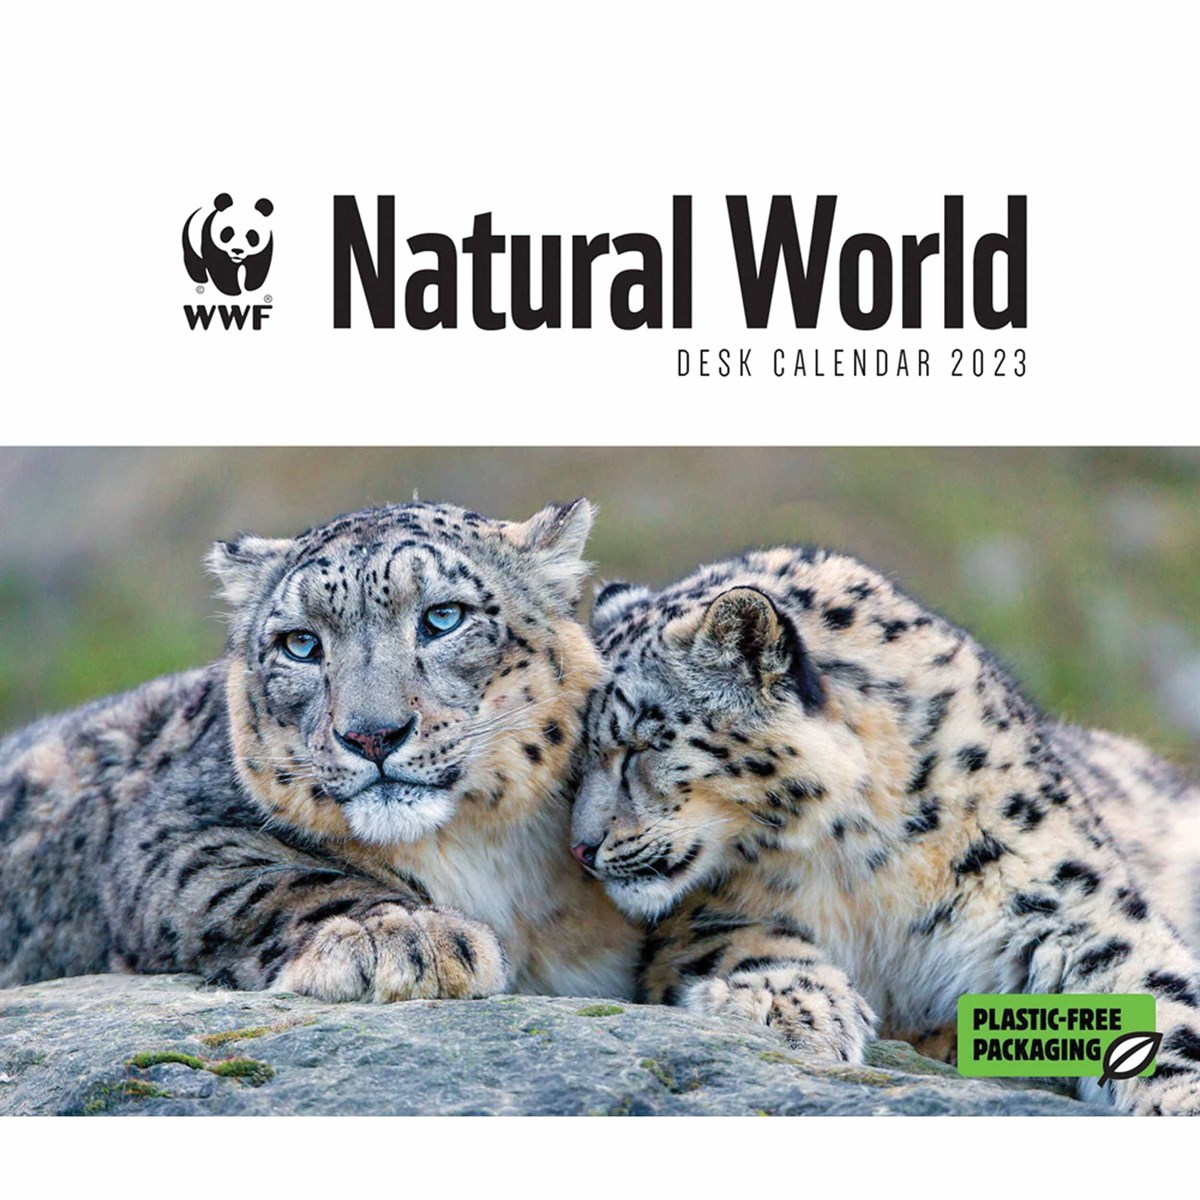 WWF, Natural World Desk 2023 Calendars